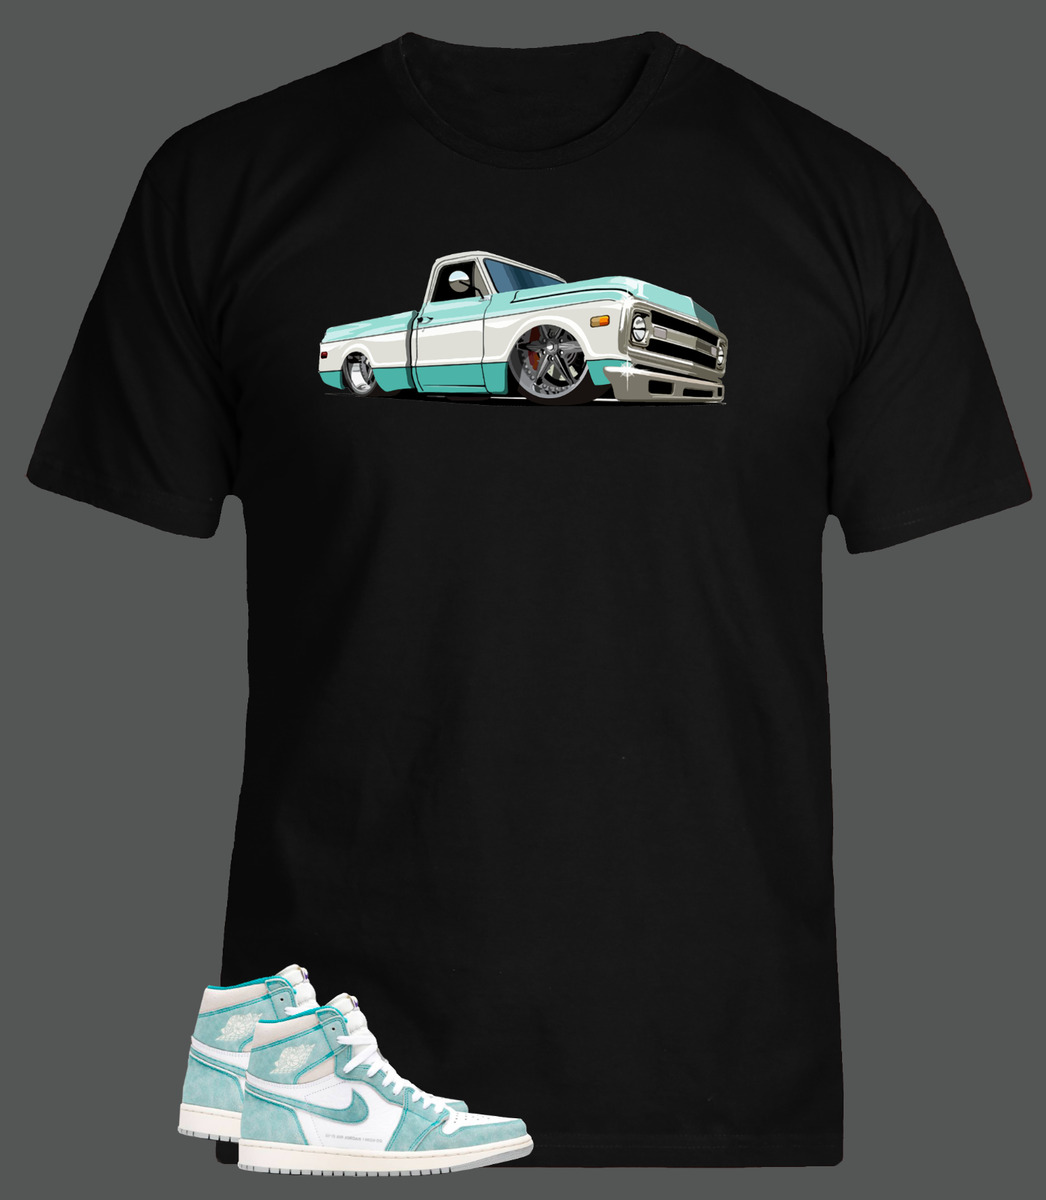 Beautiful Sneaker Tee Shirt to Match Air Jordan Shoes, Blue Chevy C10, Unisex Sizing on eBay